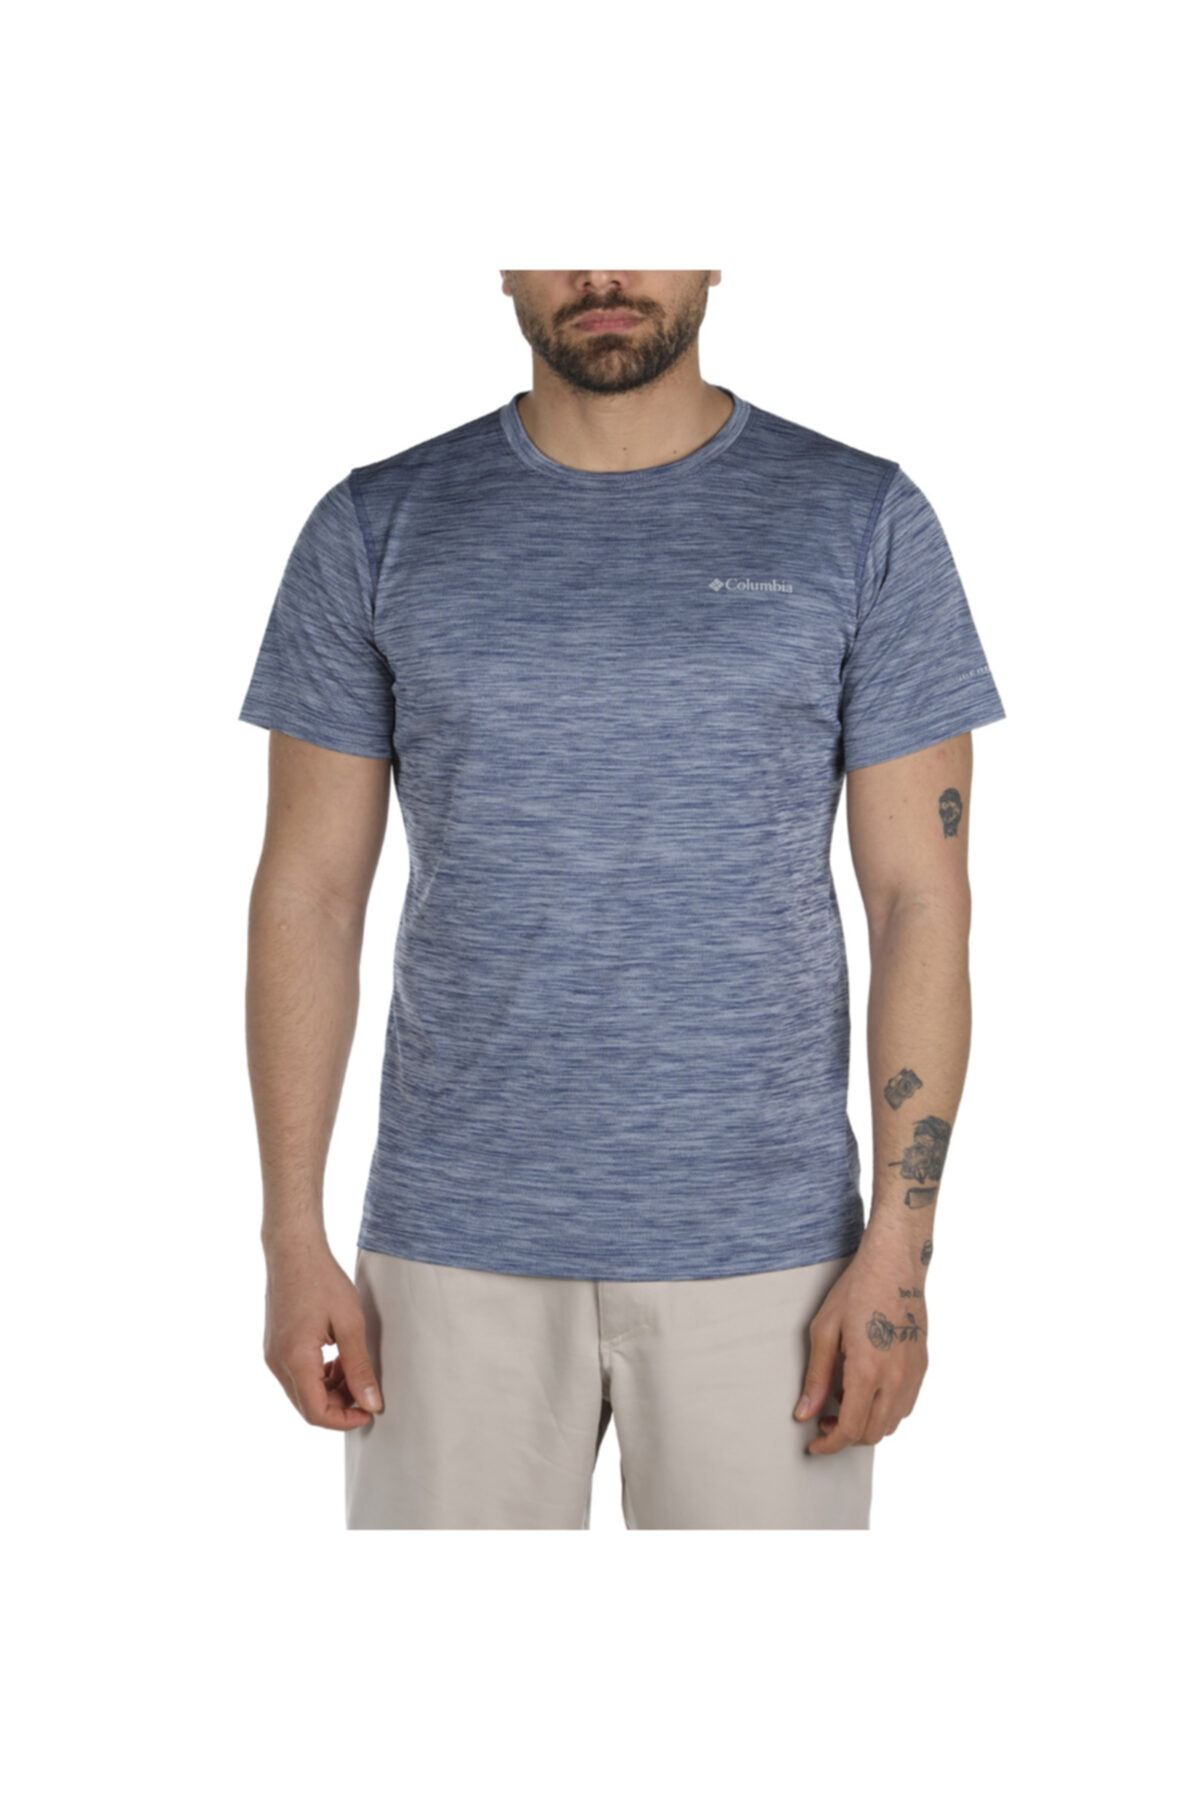 Columbia Zero Rules Kısa Kollu Erkek T-shirt